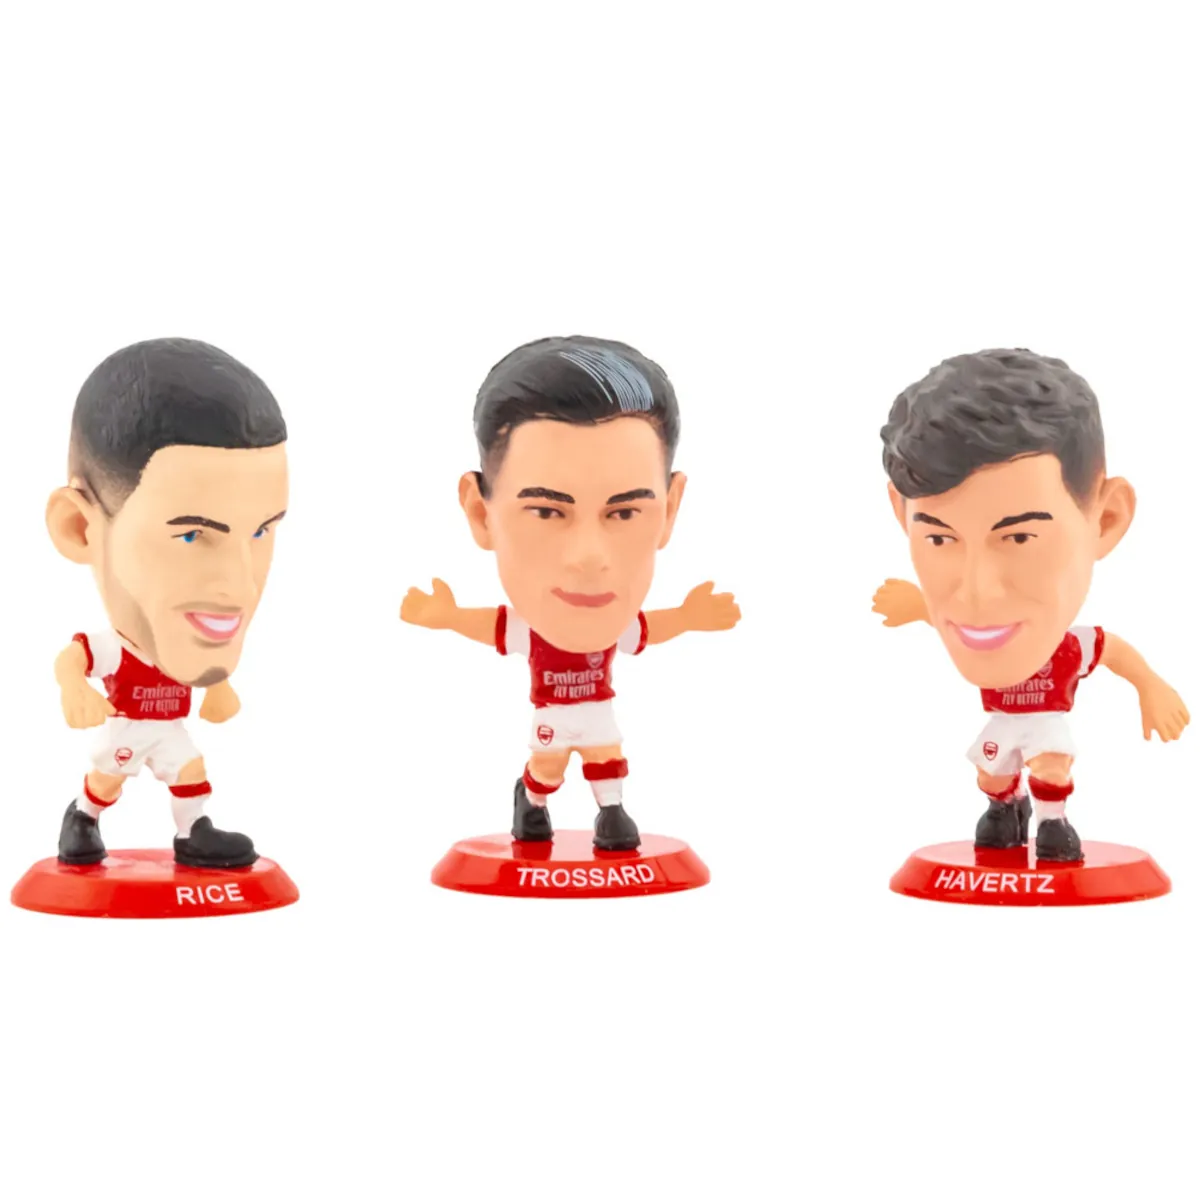 TM-04895 Arsenal F.C. SoccerStarz Collectable Figures (3-Pack) - Havertz, Rice & Trossard